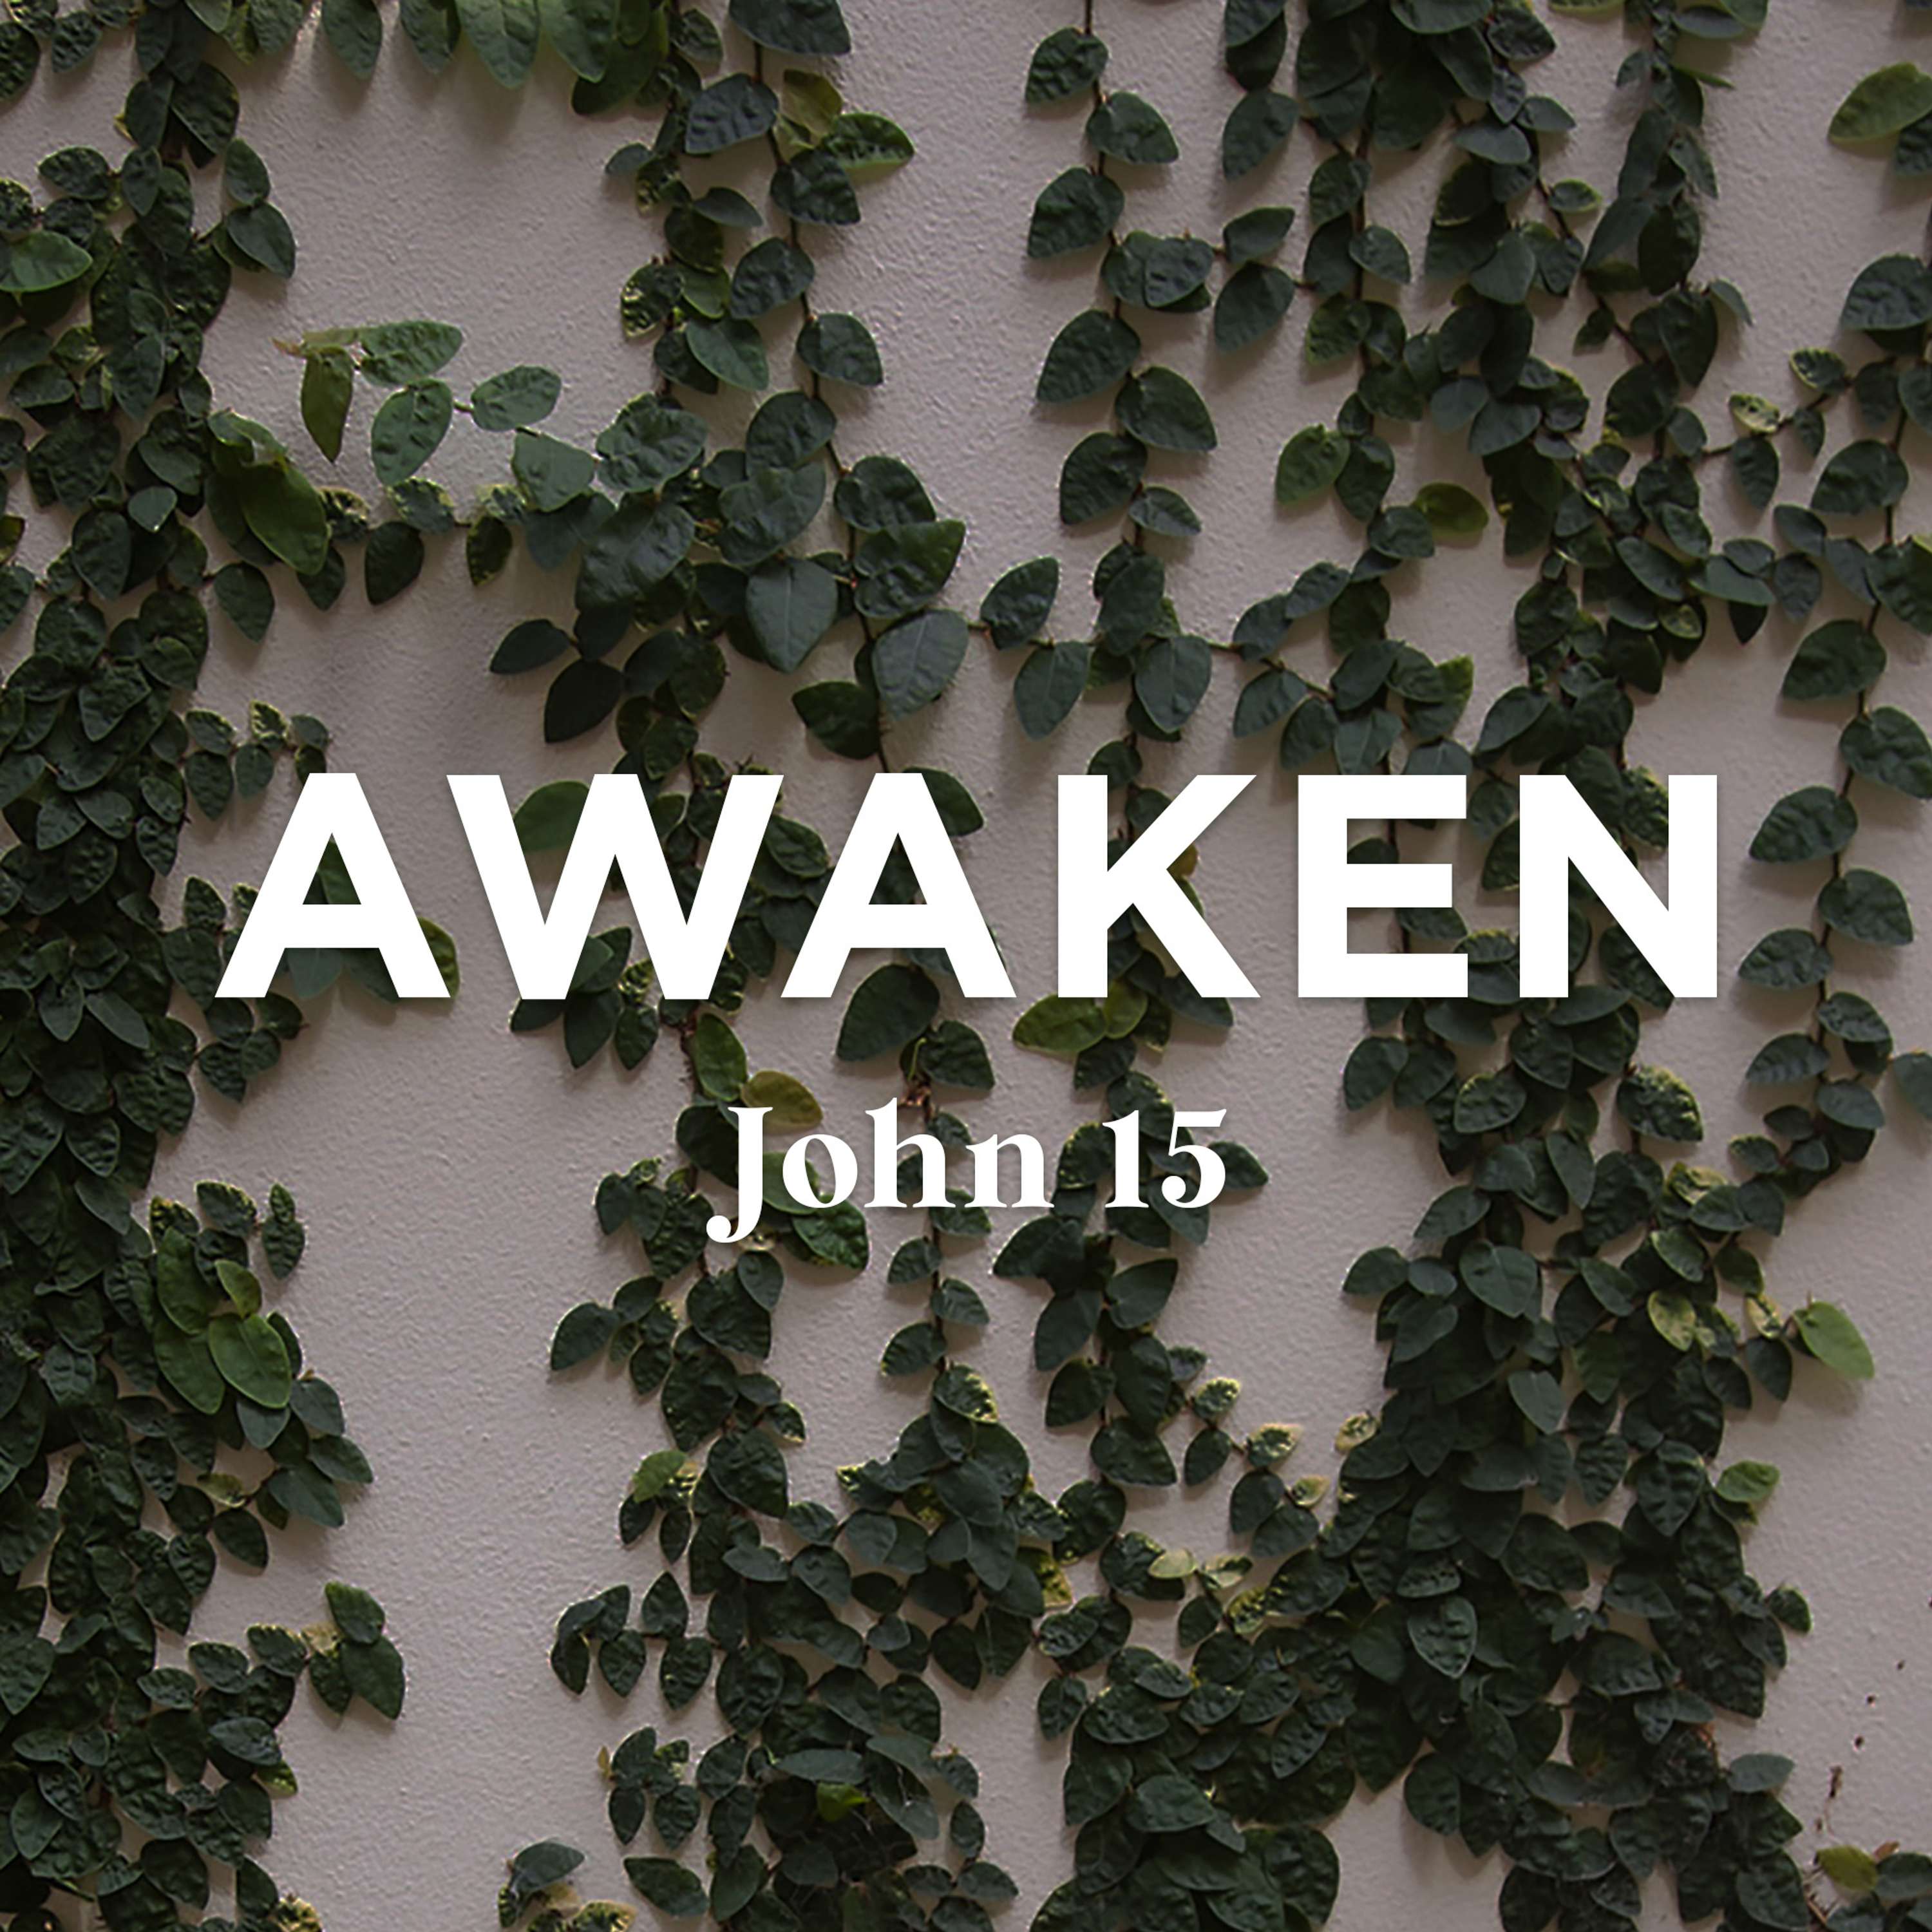 The Gift of Pruning (John 15)